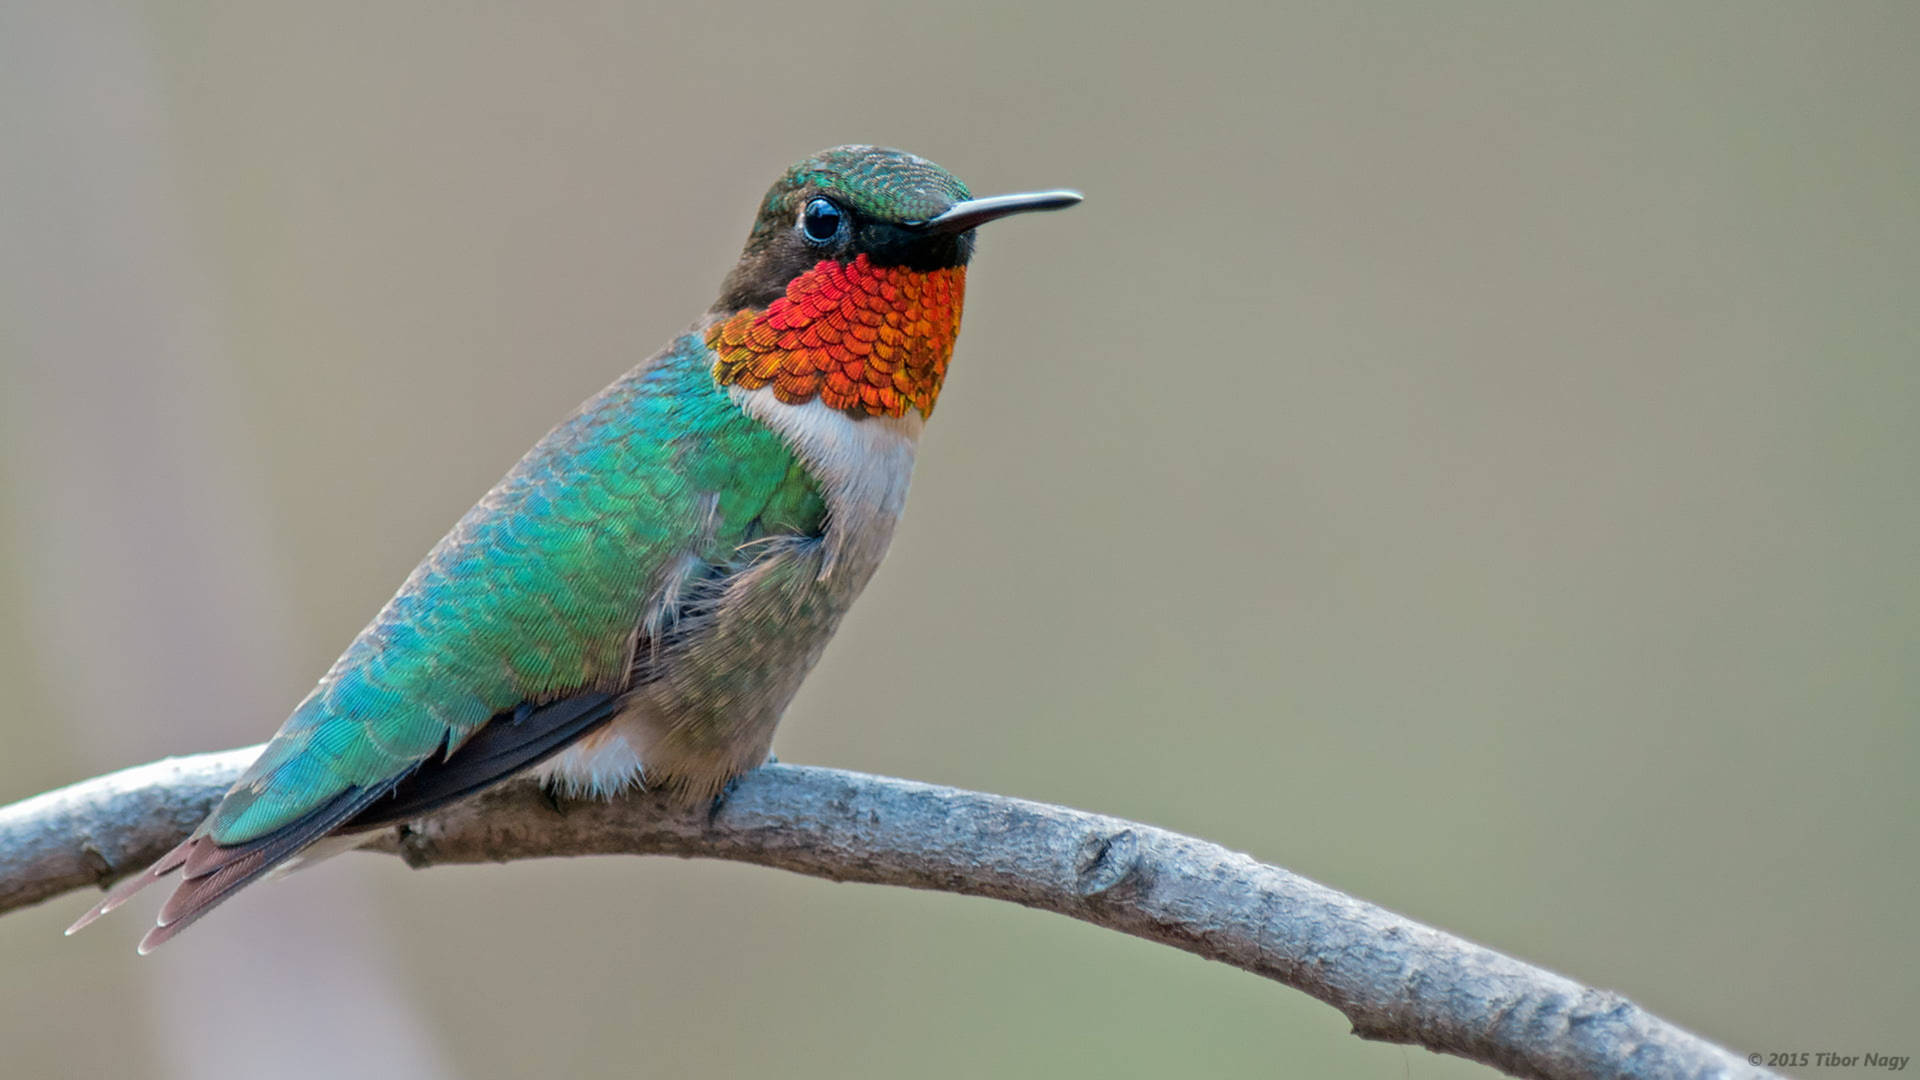 Caption: Vibrant multicolored hummingbird perched on a branch Wallpaper